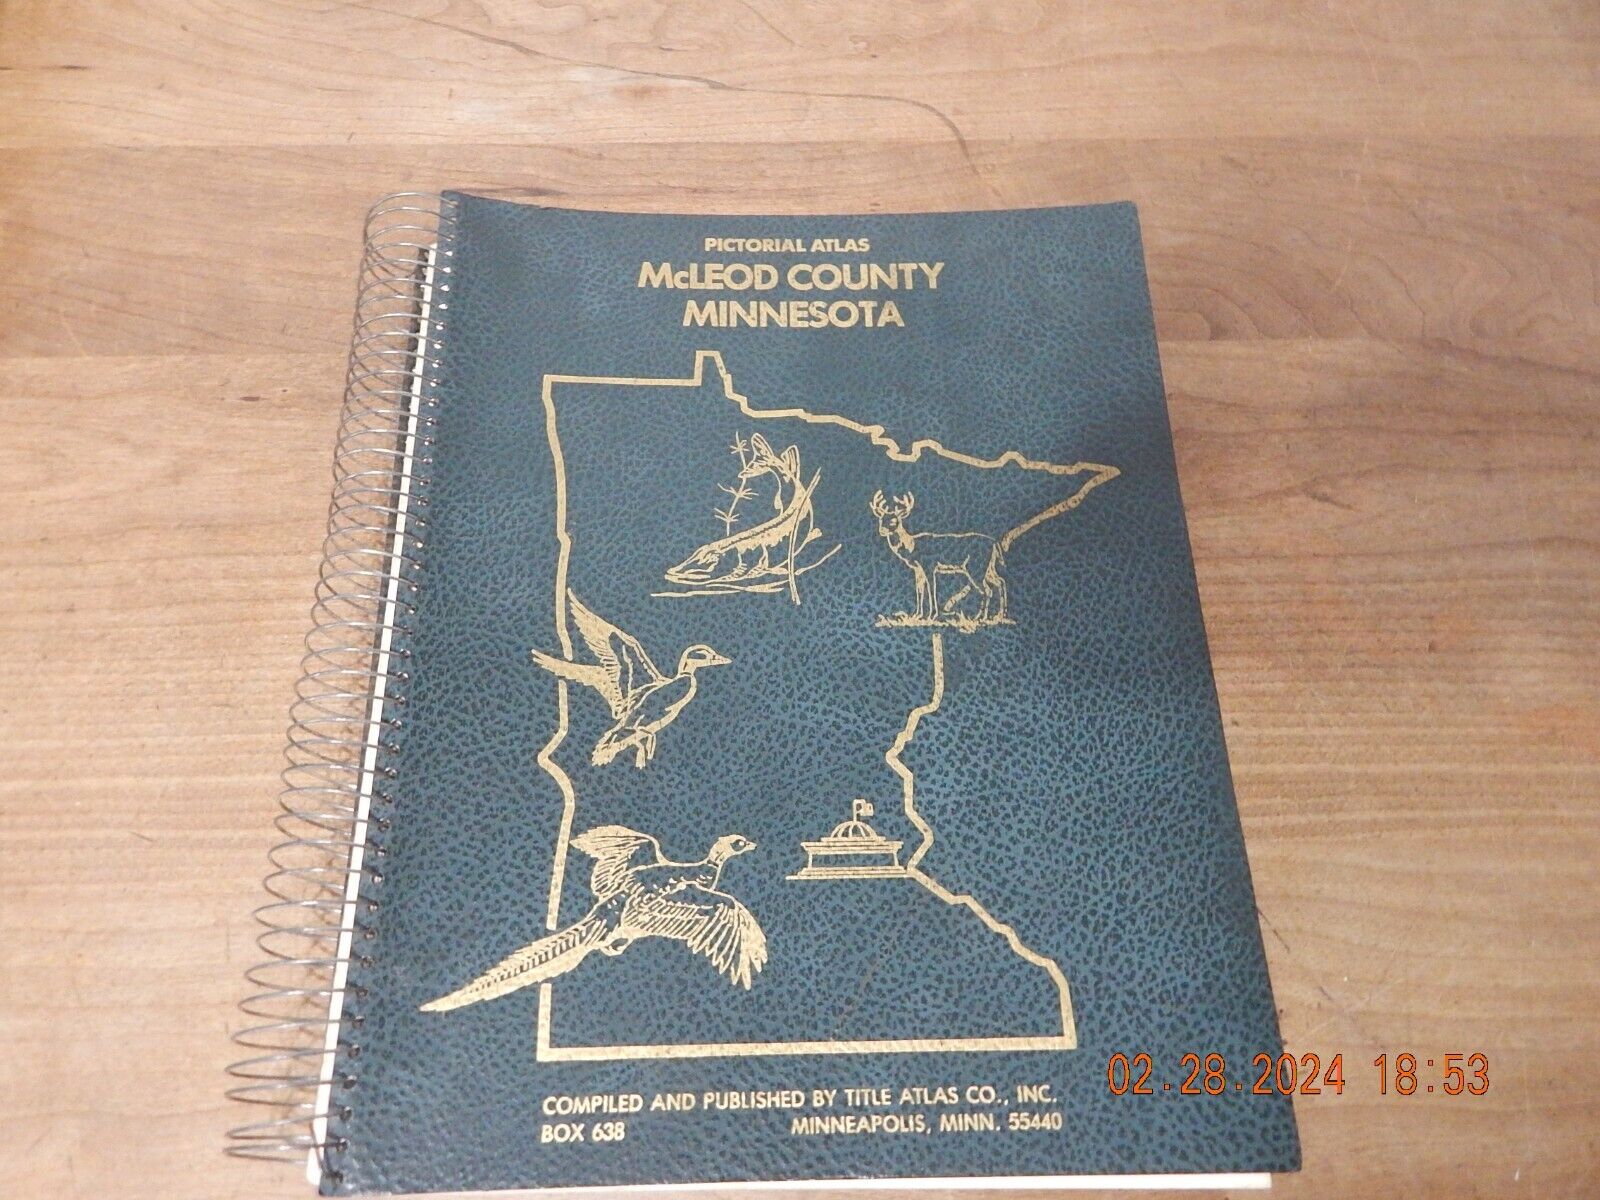 TITLE ATLAS BOOK PICTORIAL ATLAS MINNESOTA COUNTY MCLEOD 1979